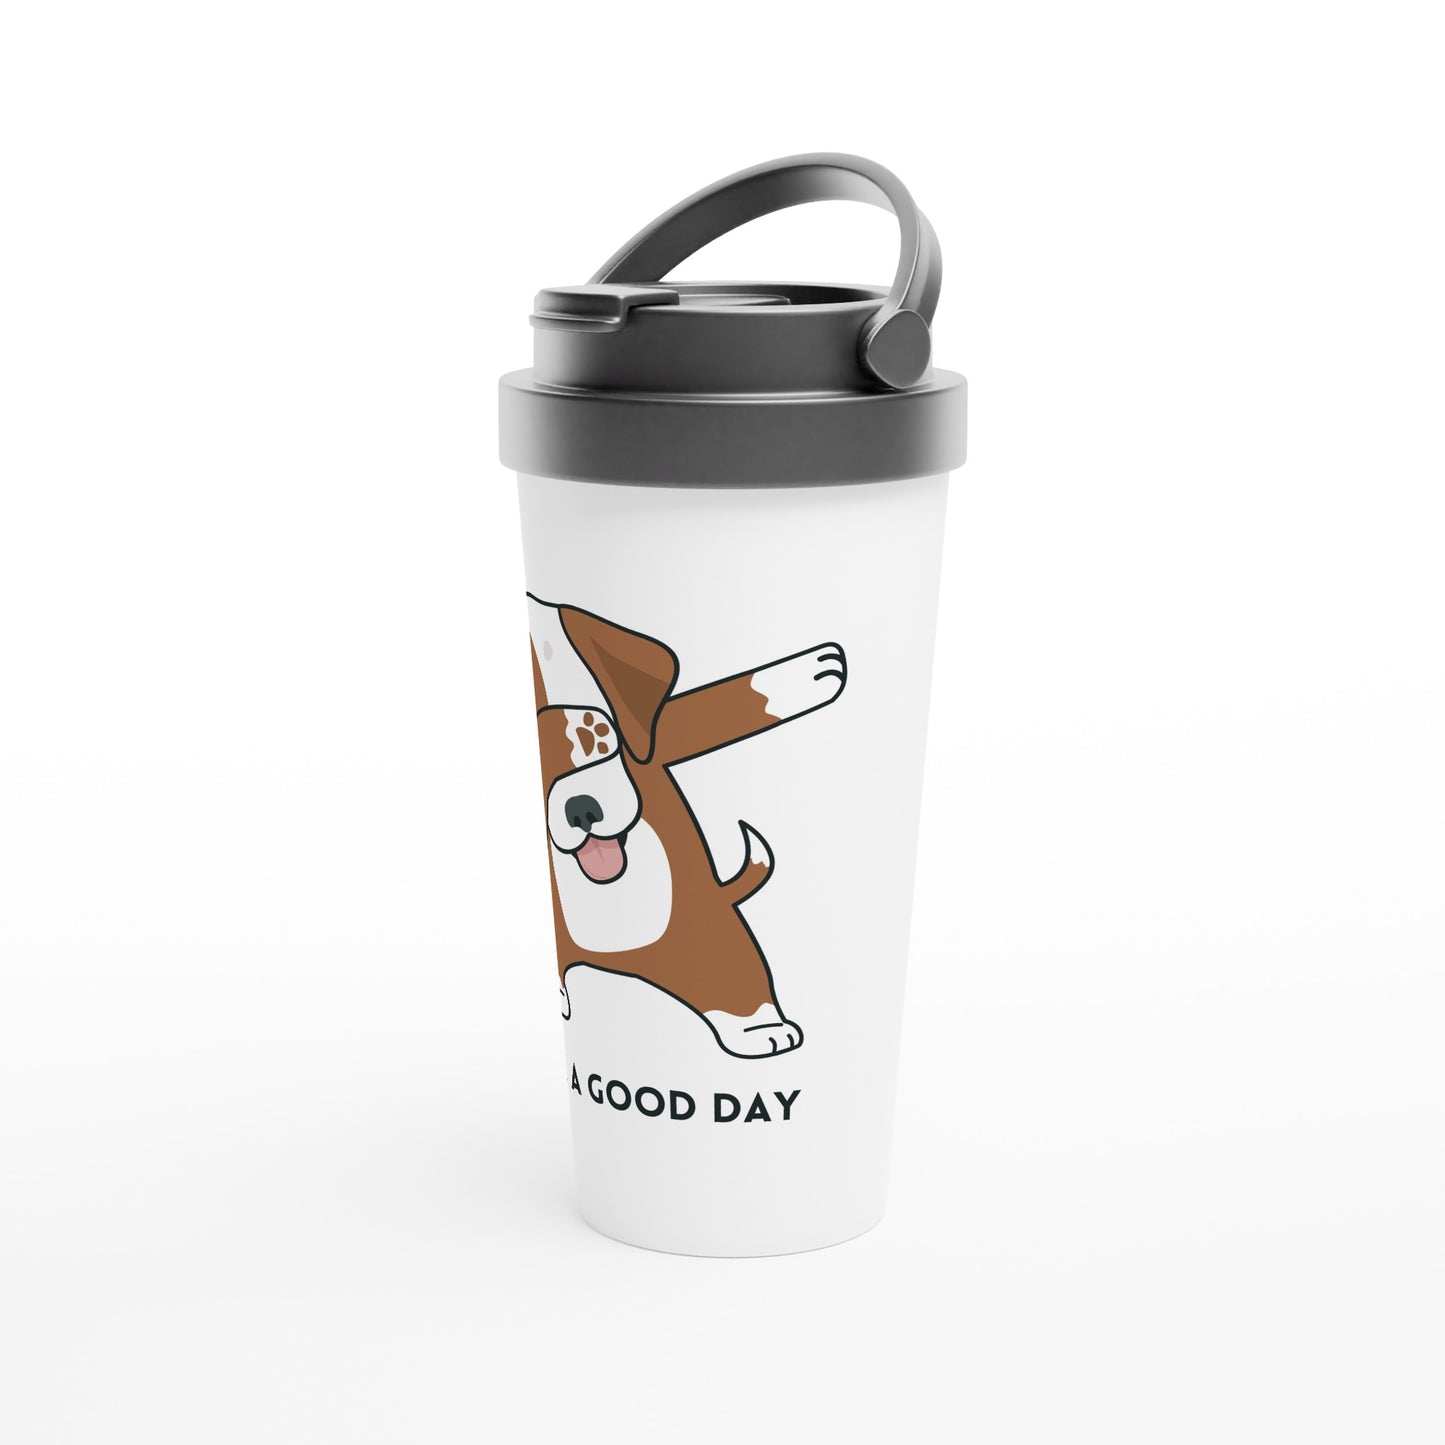 Dab Step Dog, Have A Good Day - White 15oz Stainless Steel Travel Mug Travel Mug animal